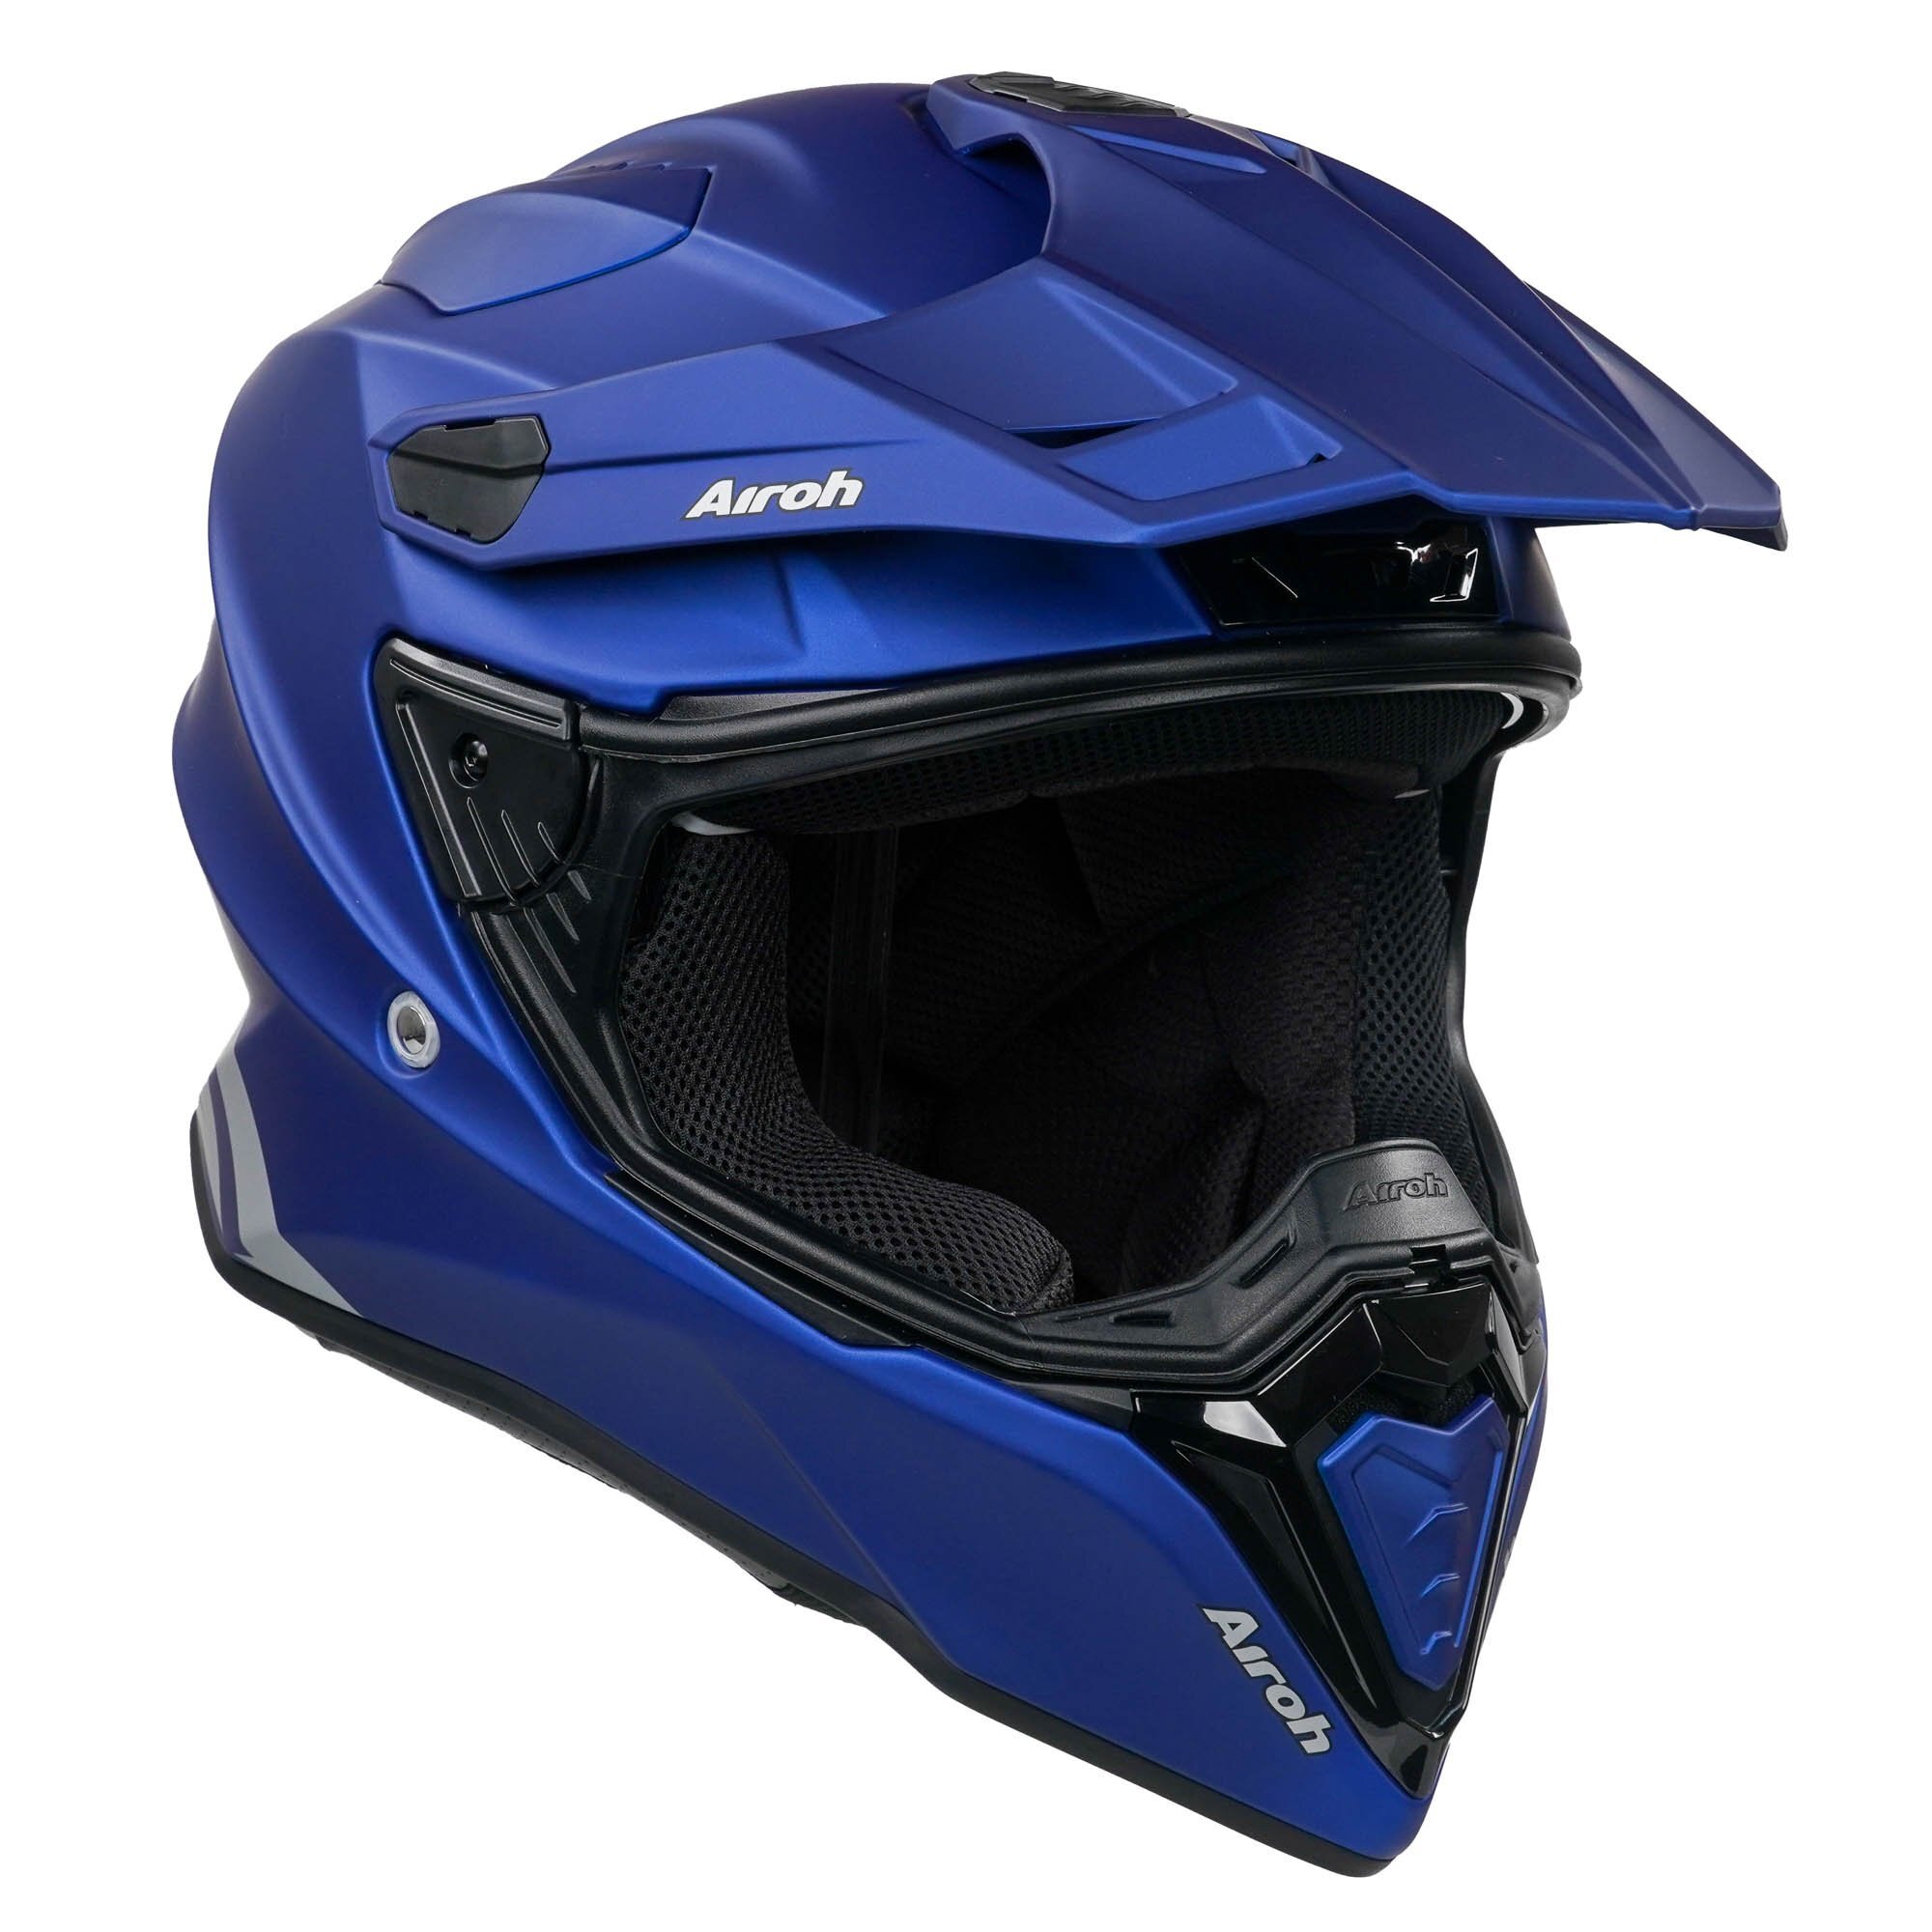 AIROH Commander Adventure - Blue Matt 2020 :: £287.95 :: Motorcycle Helmets  :: ADVENTURE HELMETS :: WHATEVERWHEELS LTD - ATV, Motorbike & Scooter  Centre - Lancashire's Best For Quad, Buggy, 50cc & 125cc Motorcycle and  Moped Sale